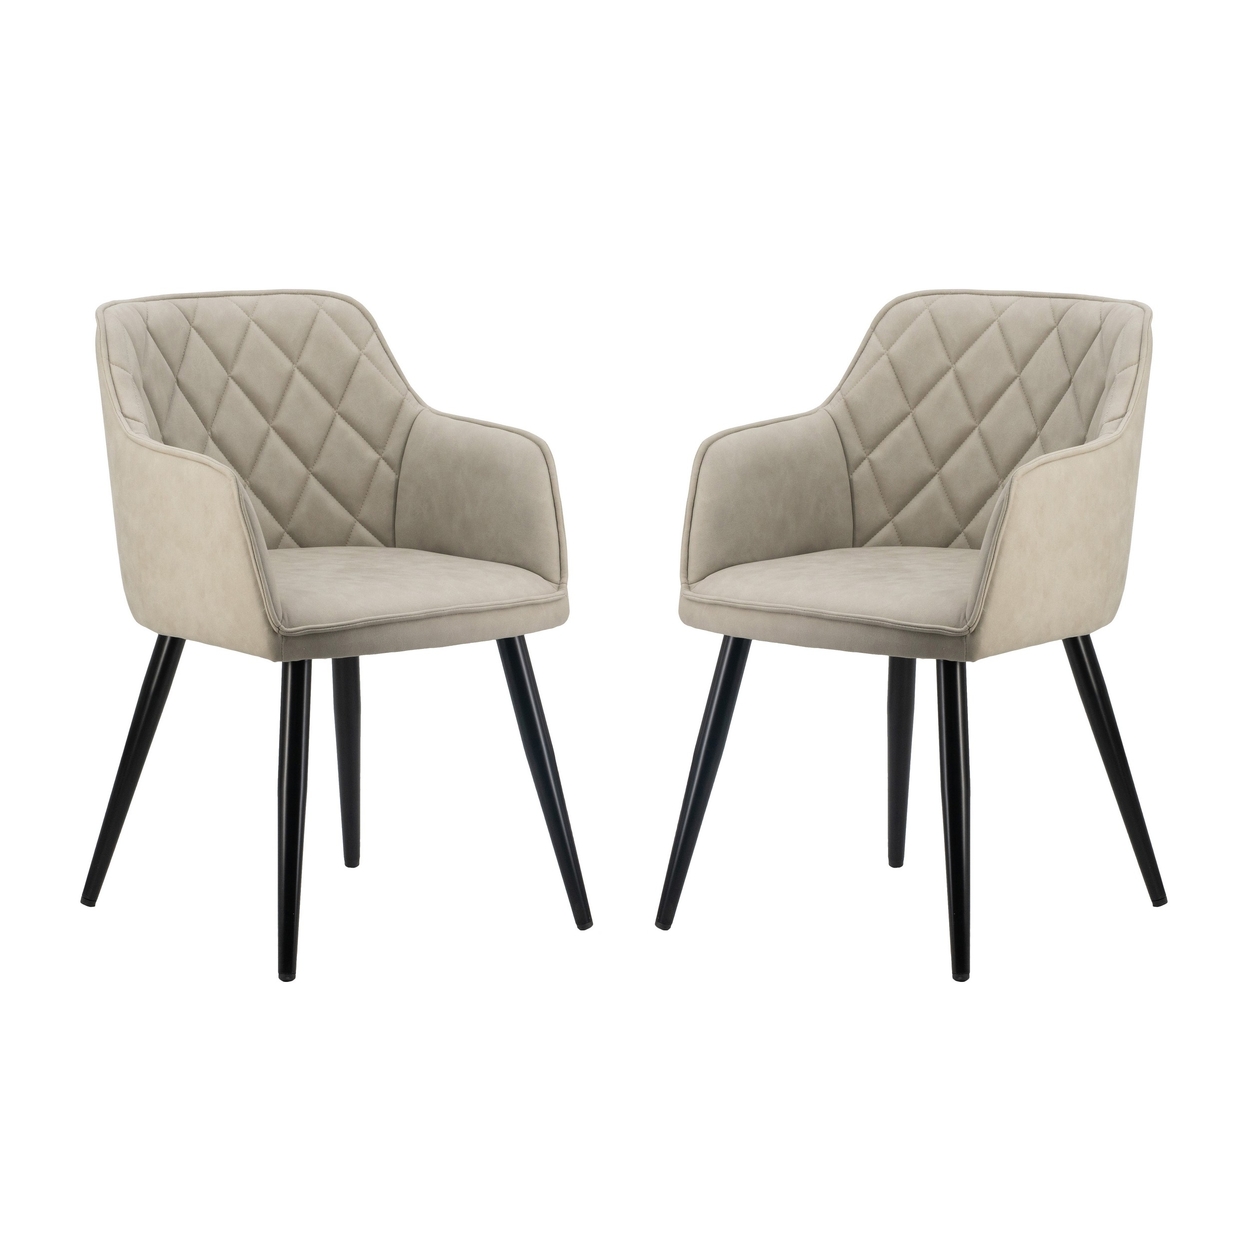 Erin 24 Inch Curved Dining Chair, Beige Fabric, Diamond Pattern Tufting- Saltoro Sherpi